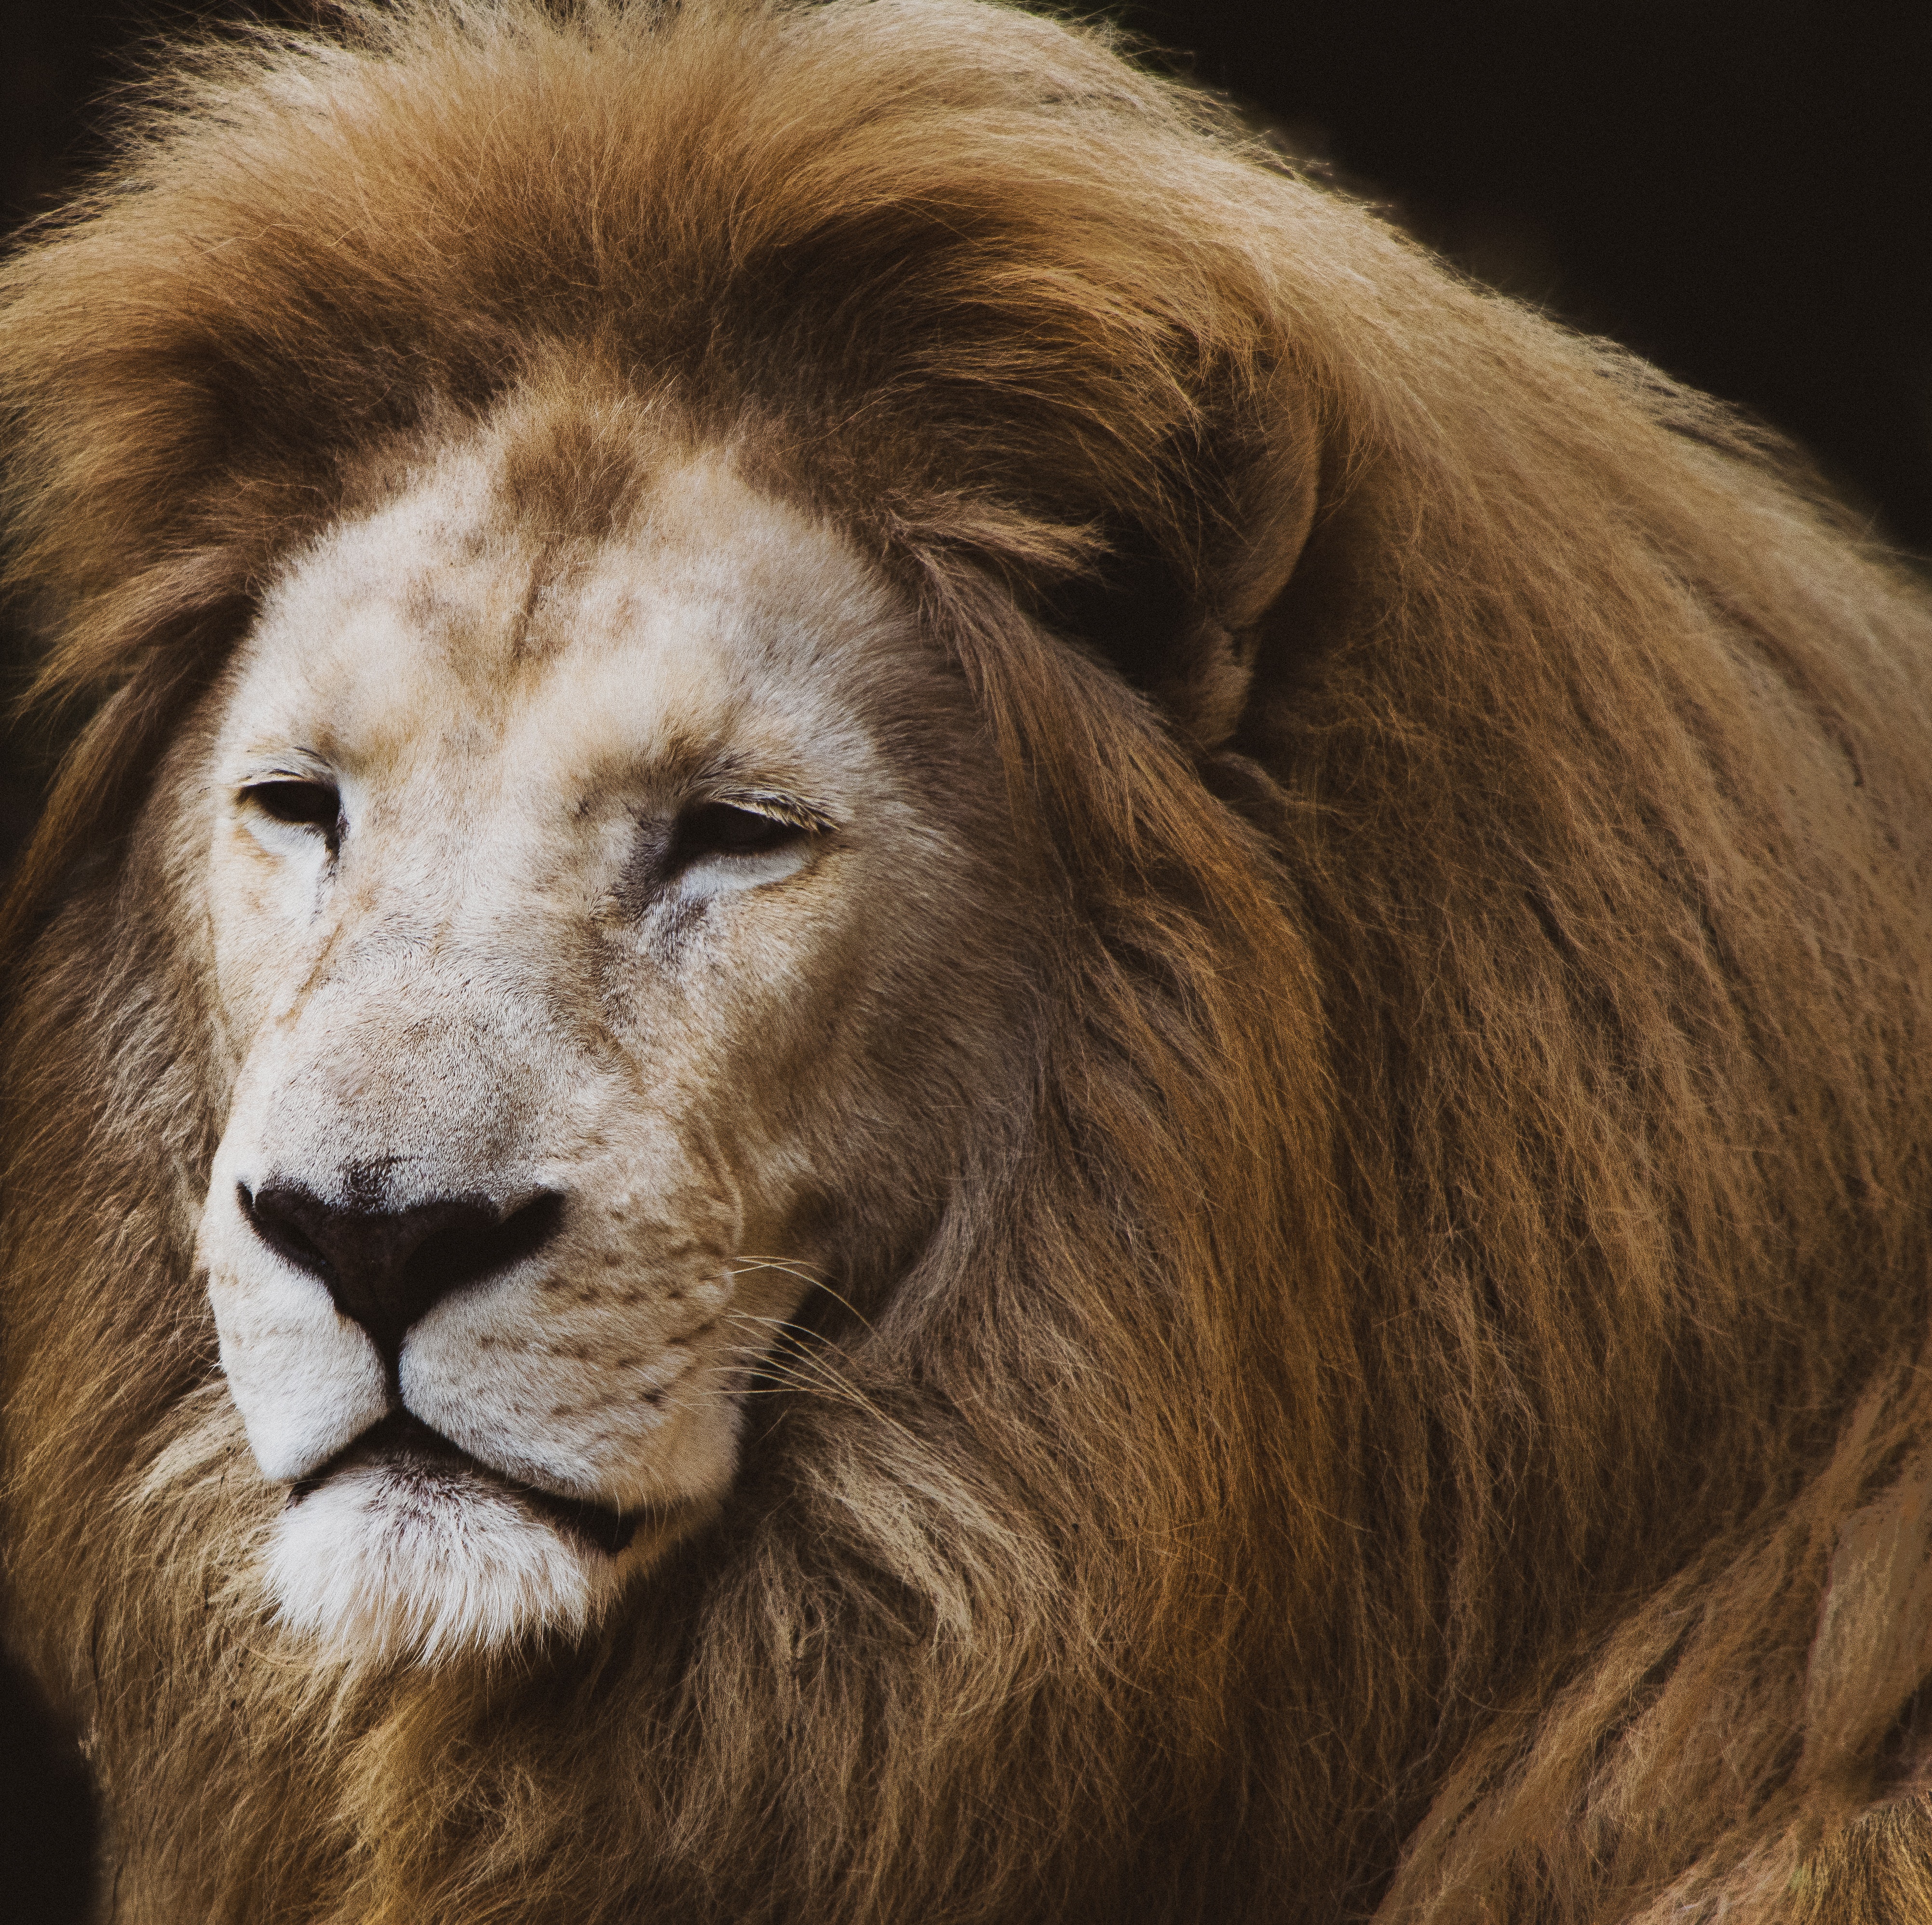 Close-up photo of a lion